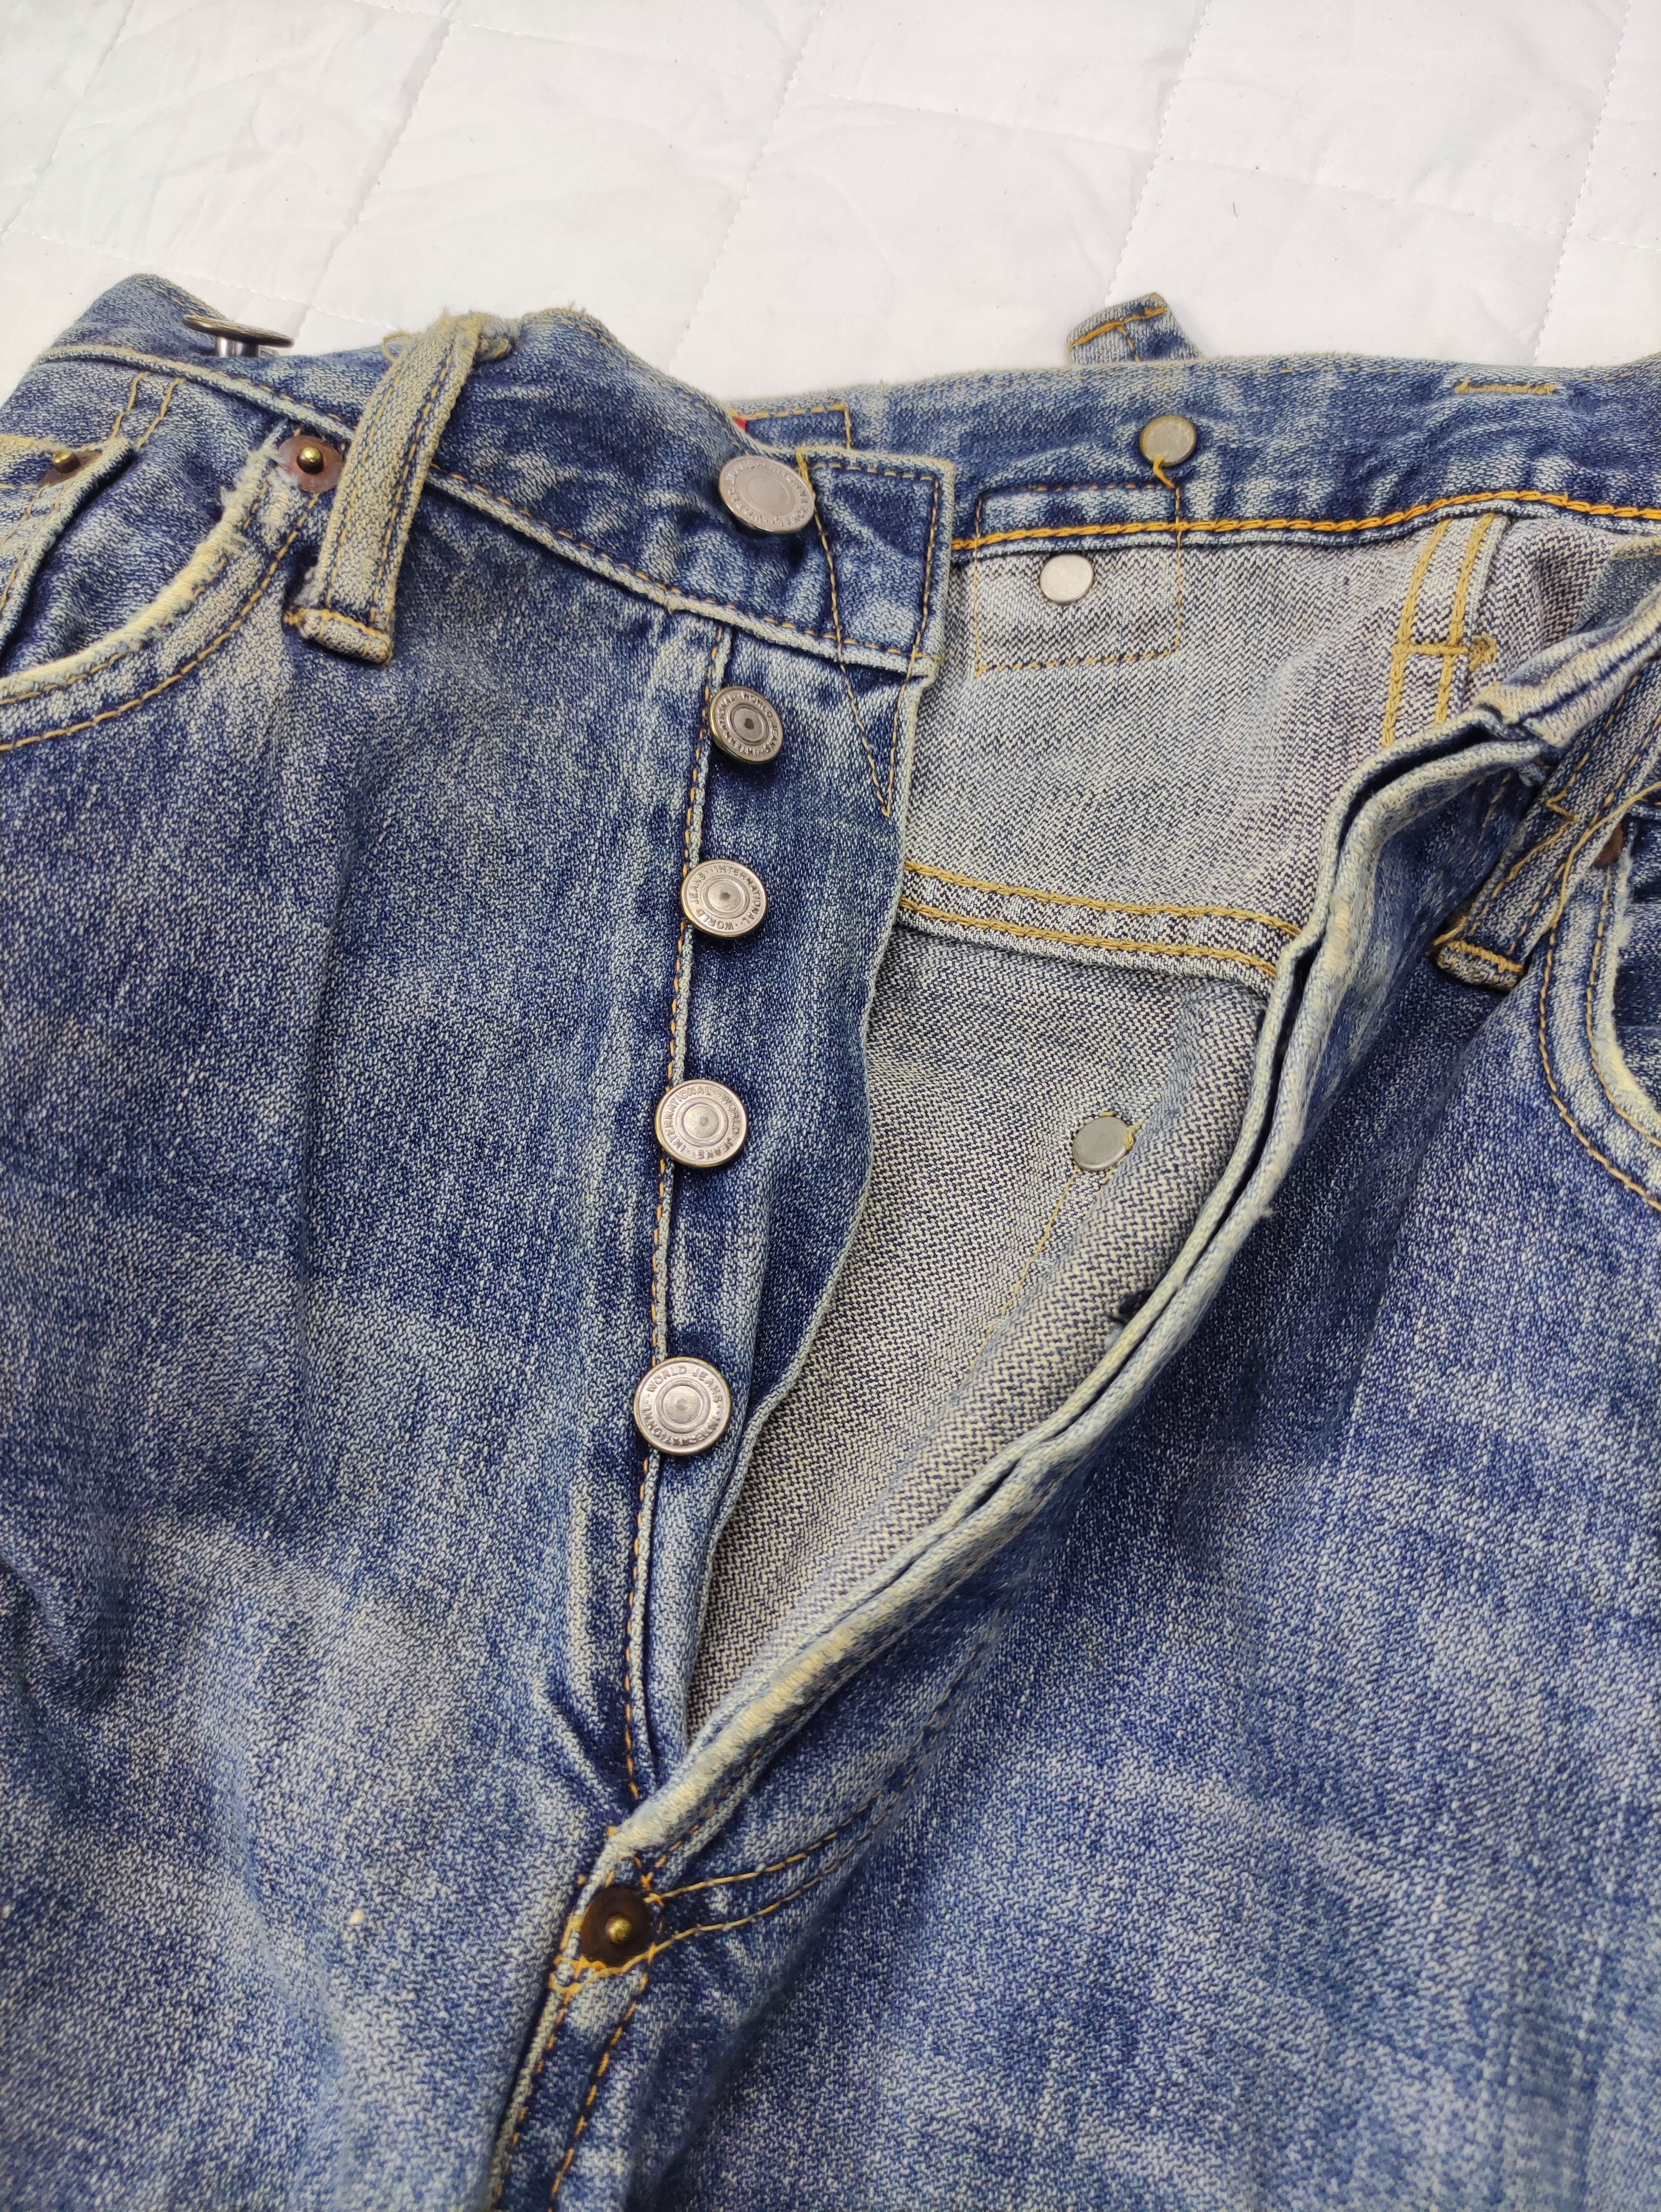 REDLINE🔥Vintage Schott Selvedge Dirty Rusty Denim Jeans - 5